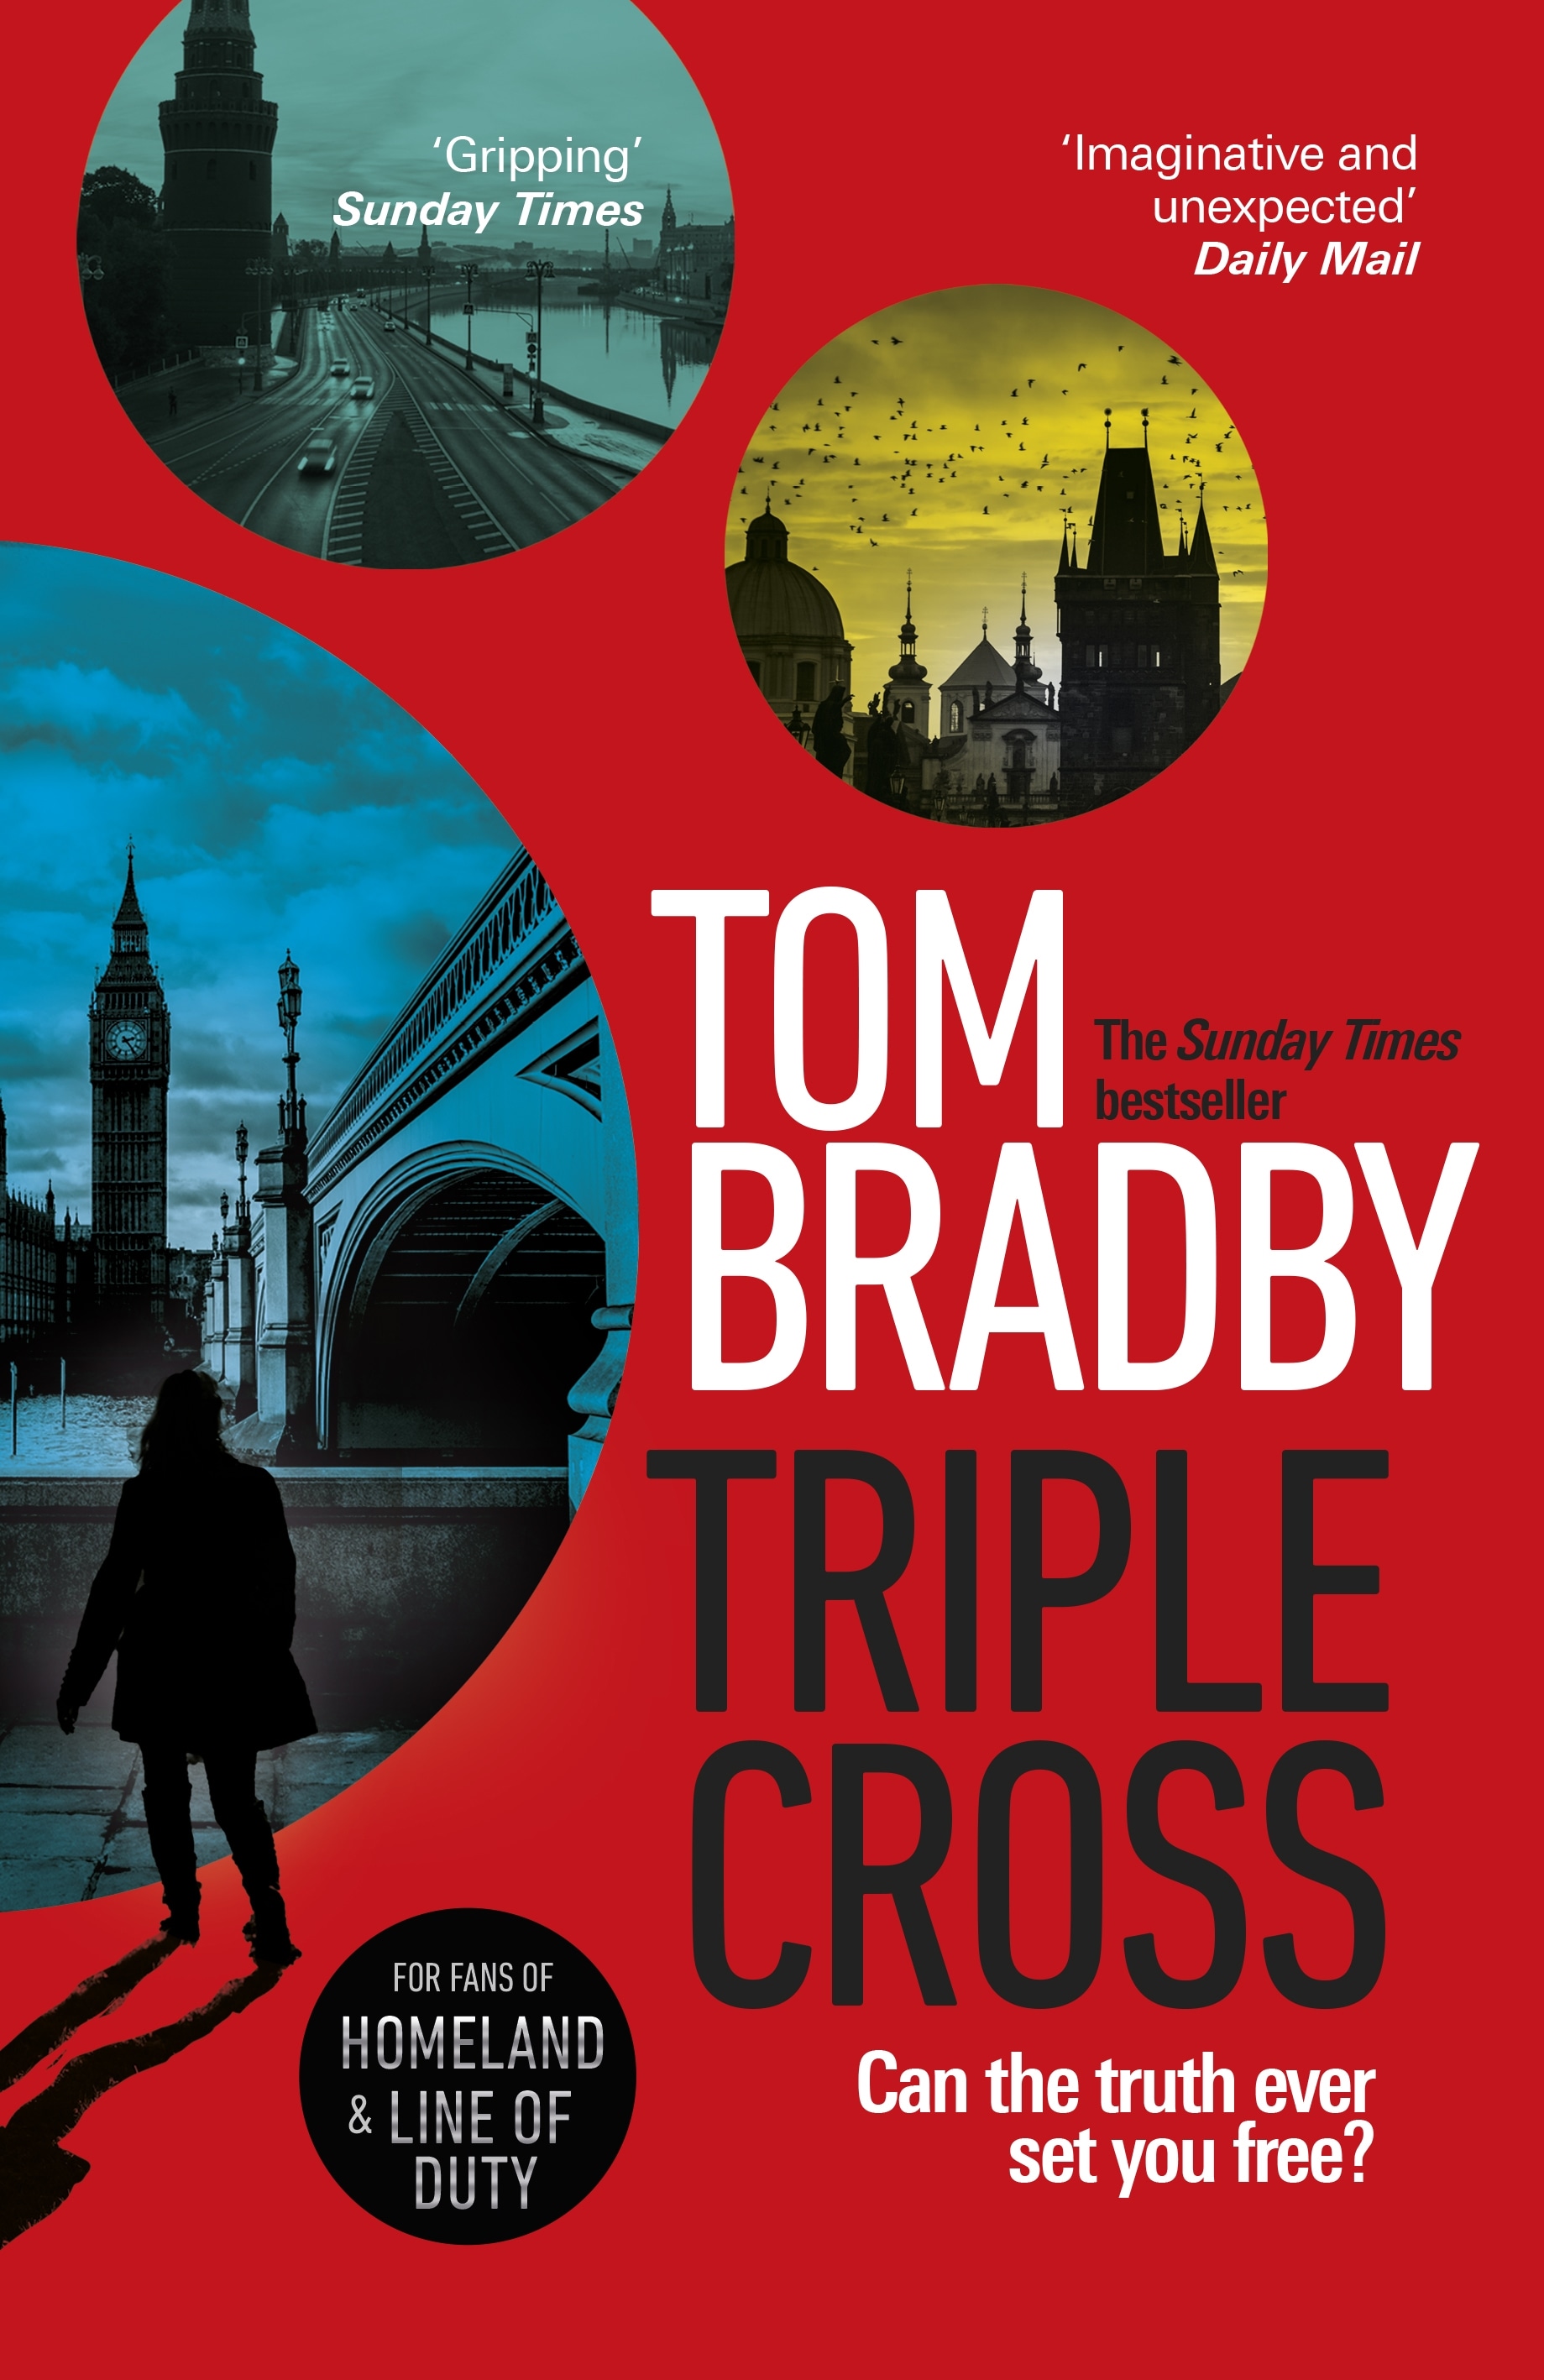 Book “Triple Cross” by Tom Bradby — May 13, 2021